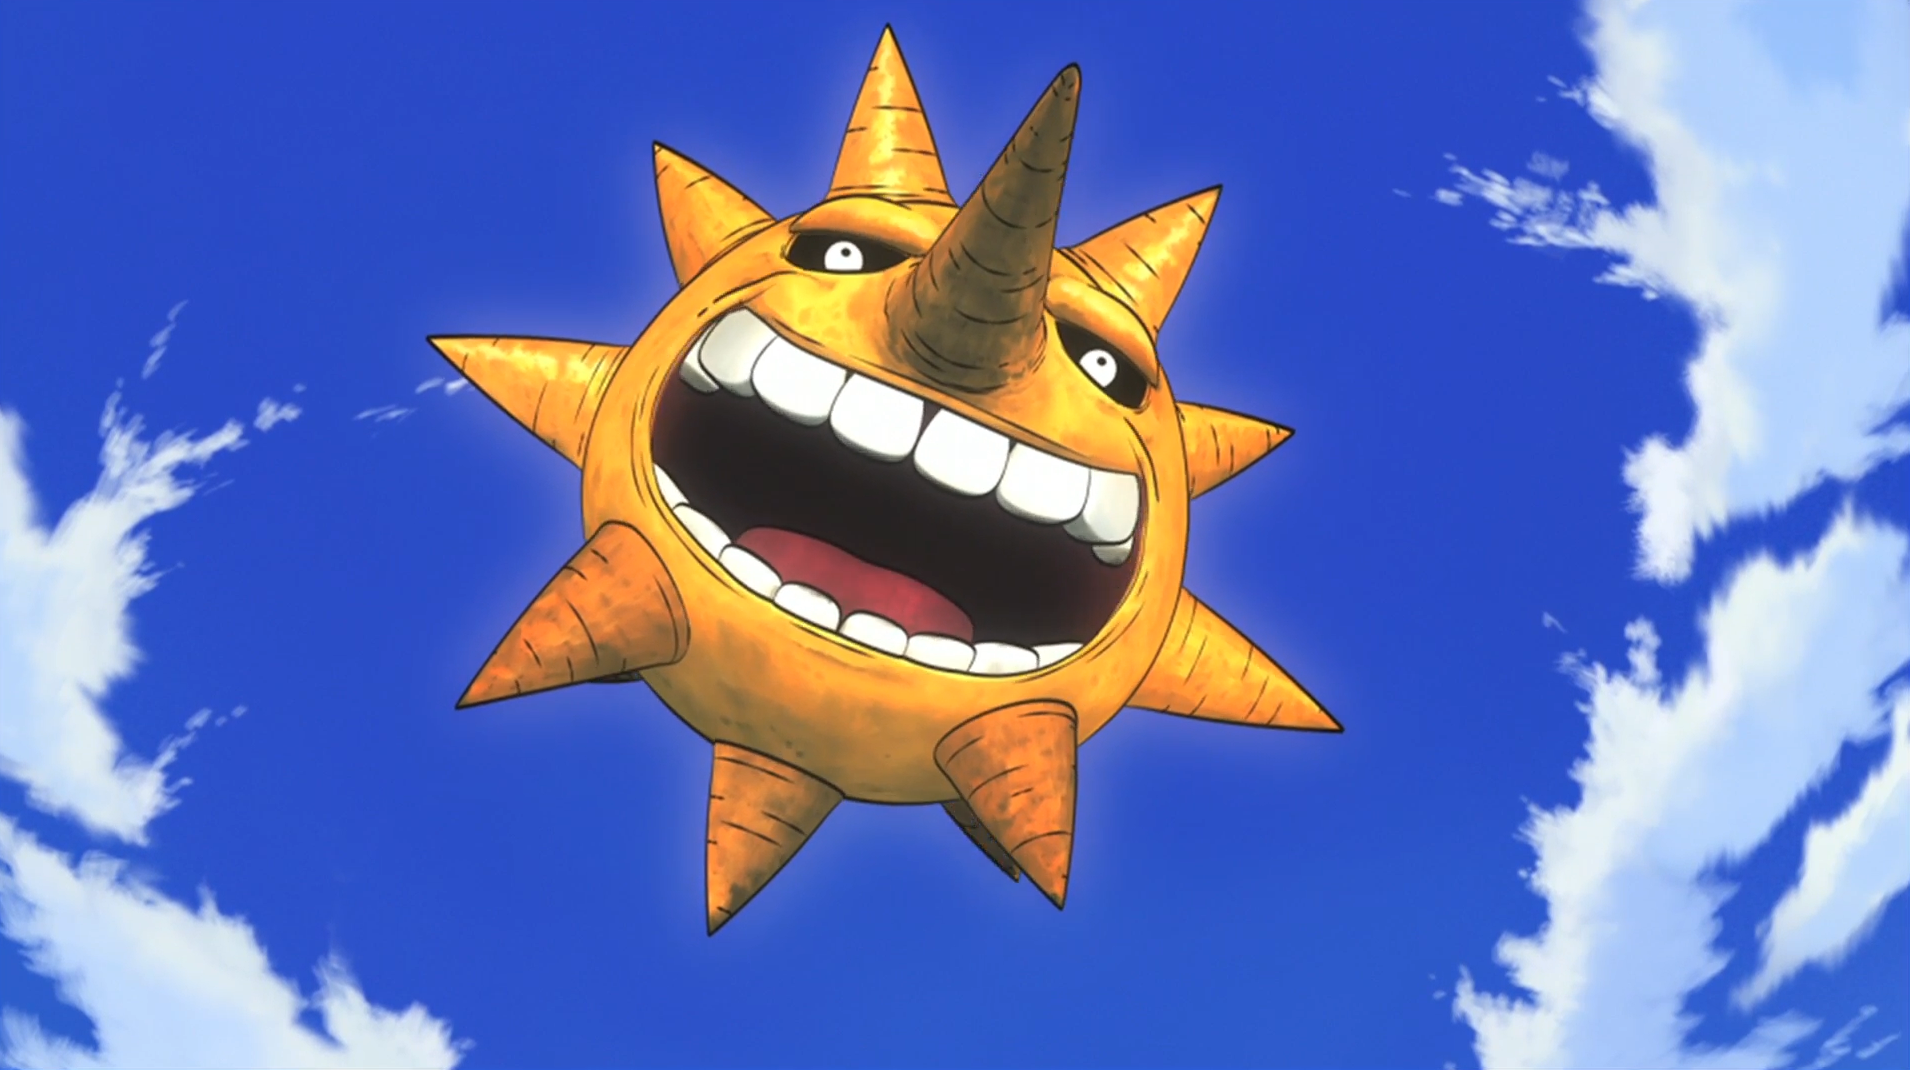 Is the Pokémon Sun and Moon anime bad? - Quora